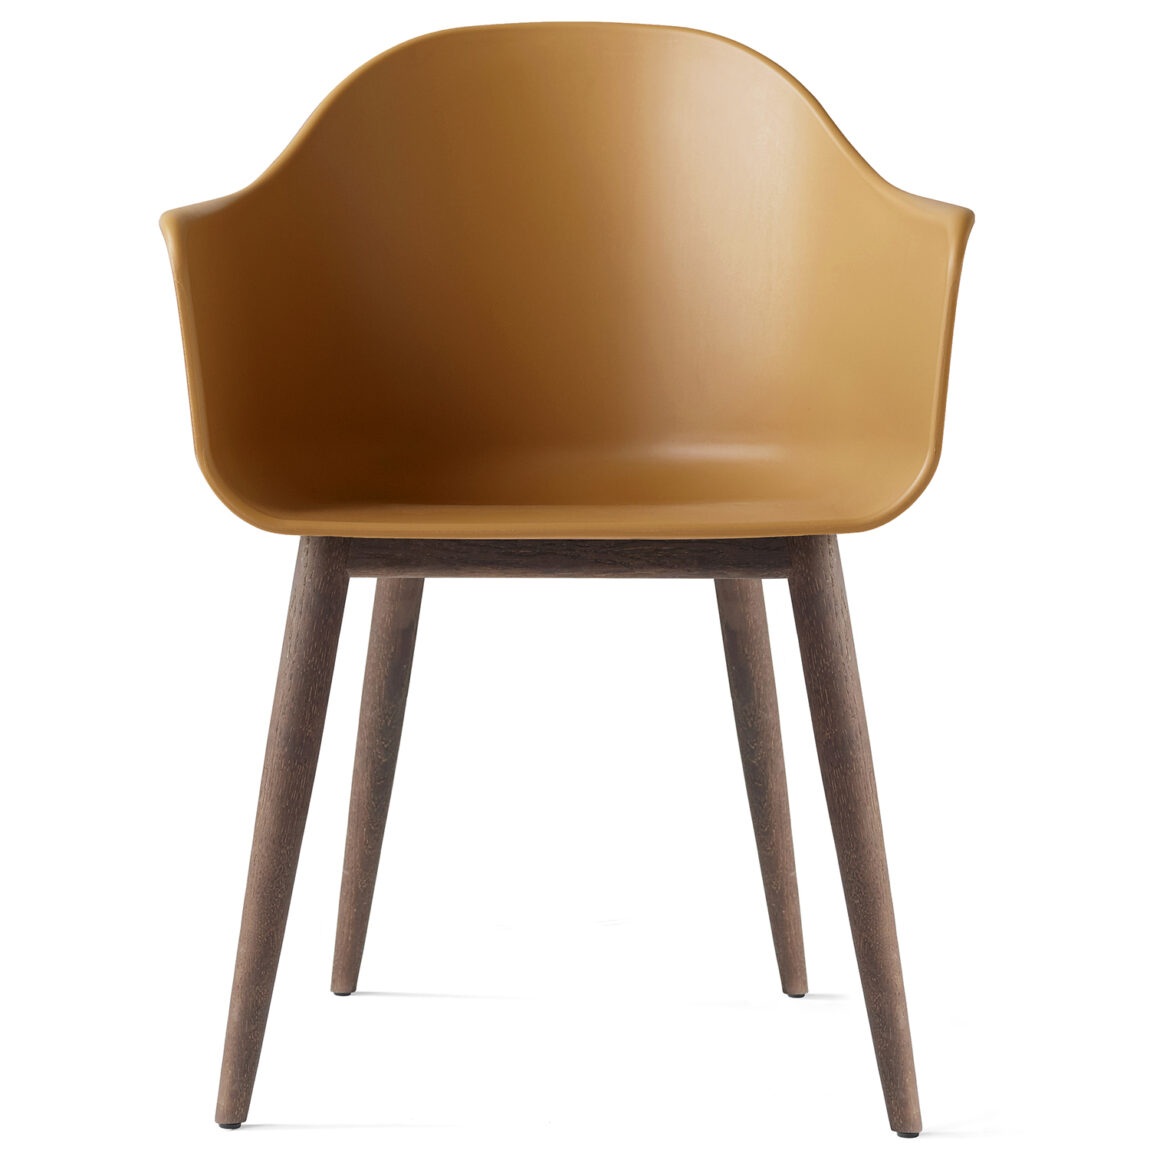 Výprodej Menu designové židle Harbour Dining Chair (sedák